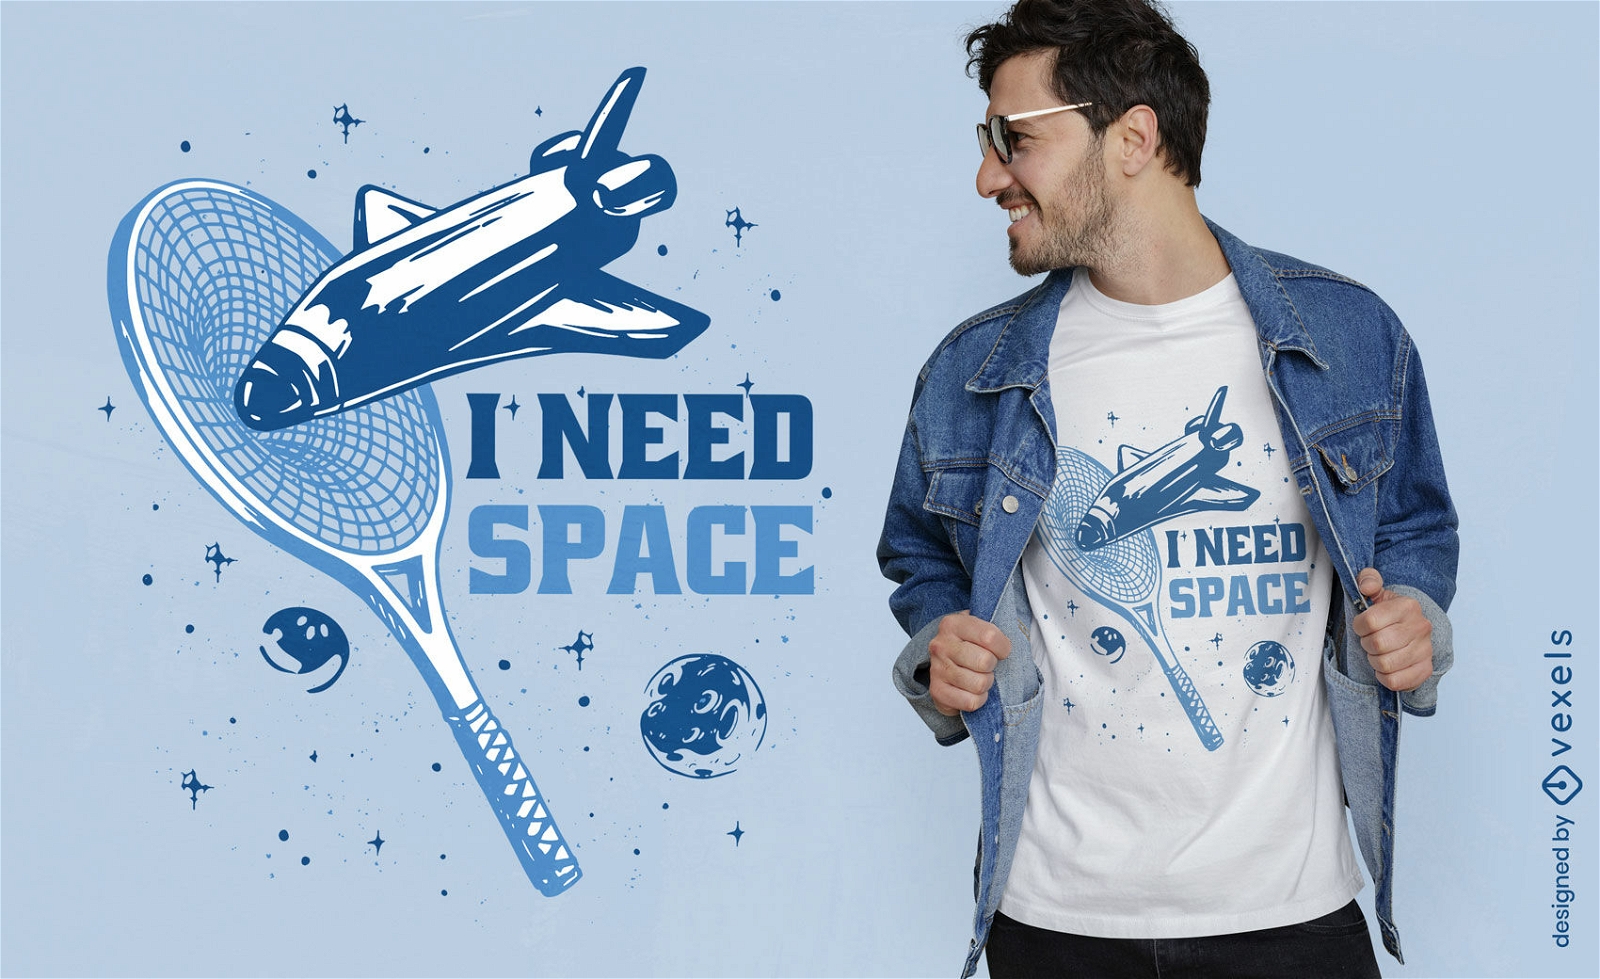 I need space monochromatic t-shirt design